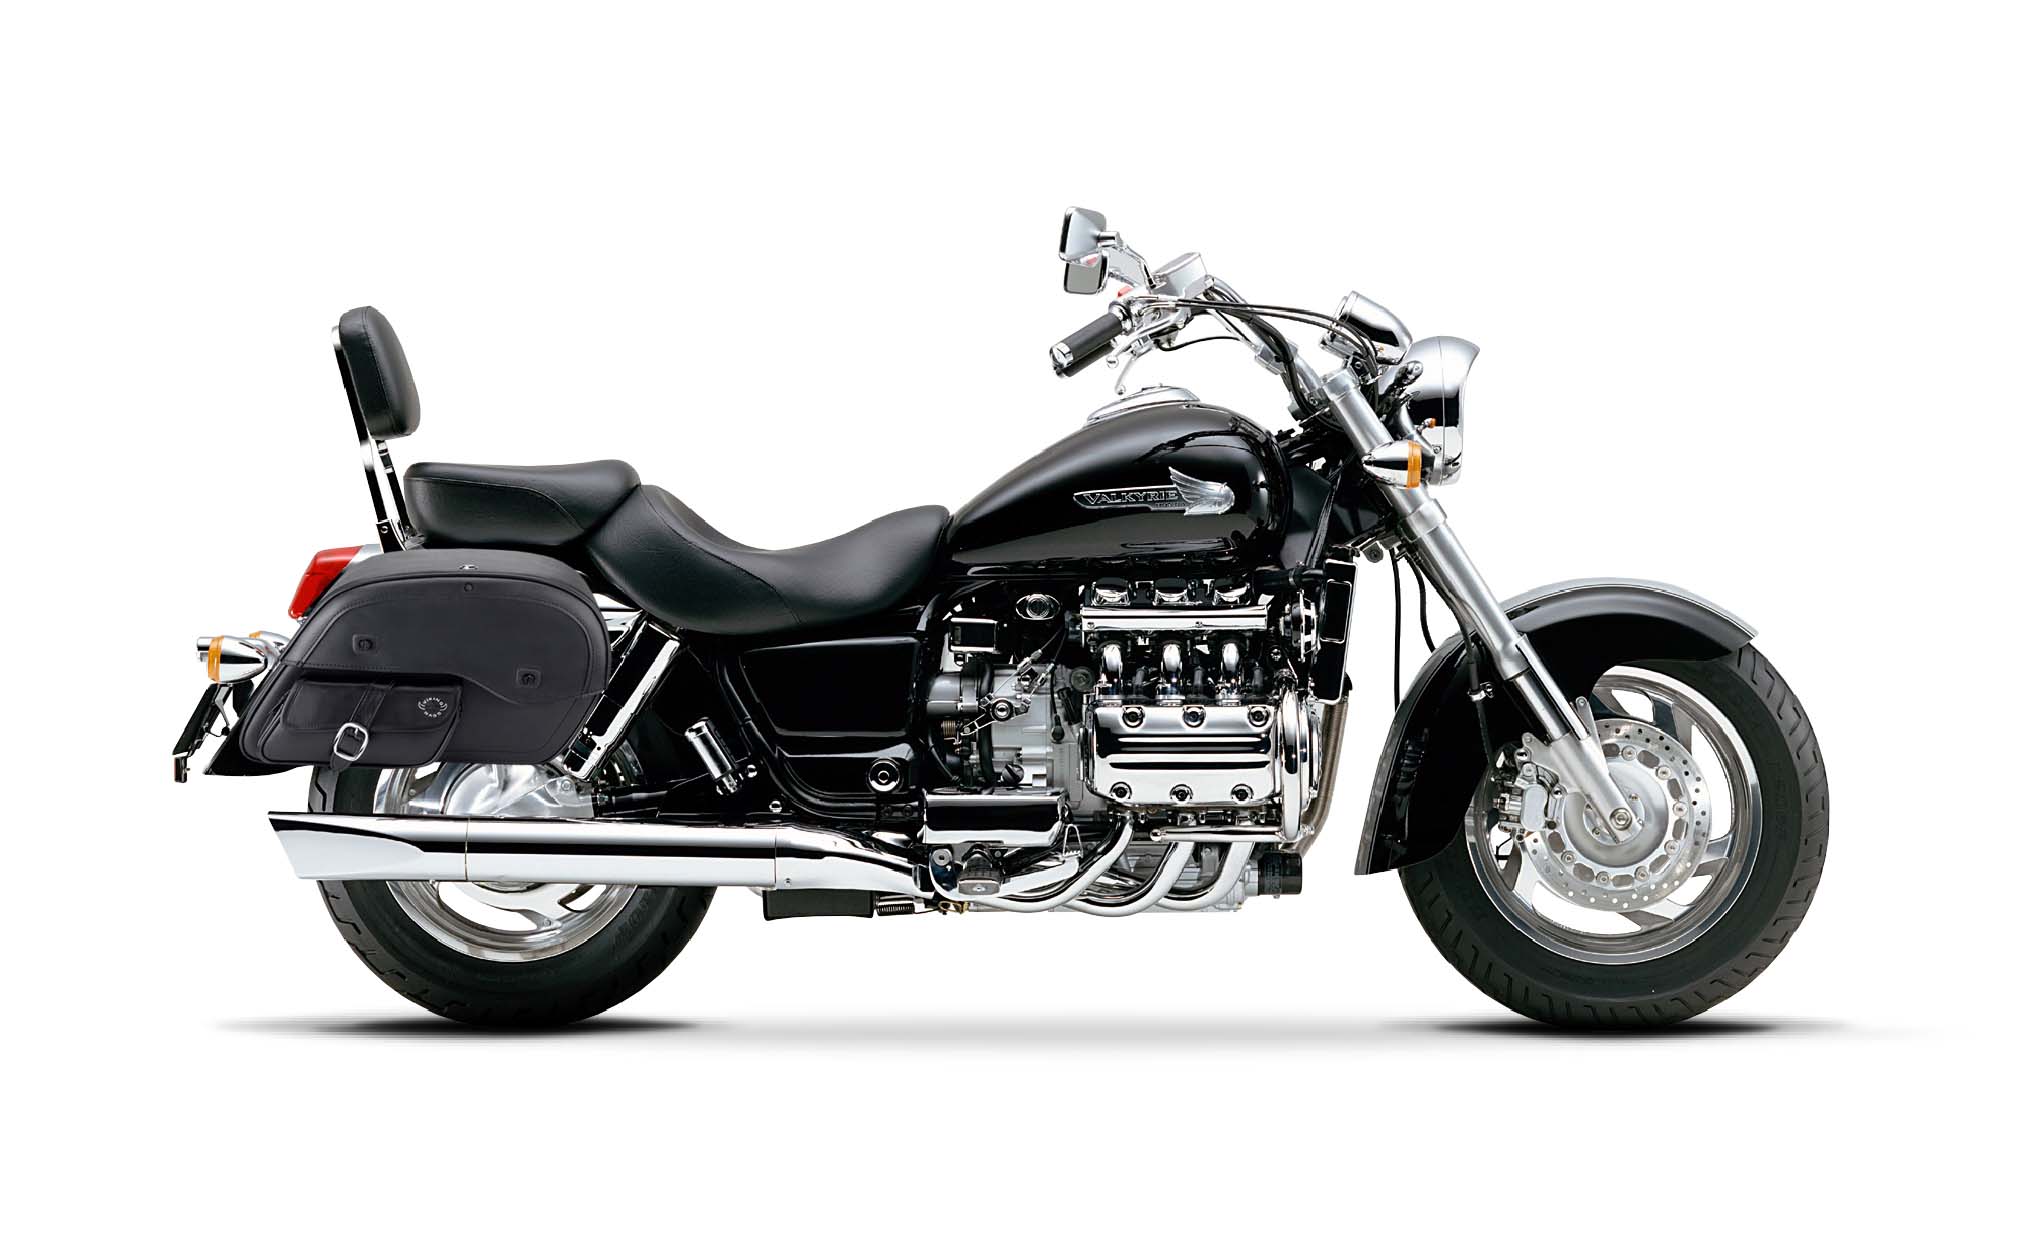 Viking Essential Side Pocket Large Honda Valkyrie 1500 Standard Leather Motorcycle Saddlebags on Bike Photo @expand